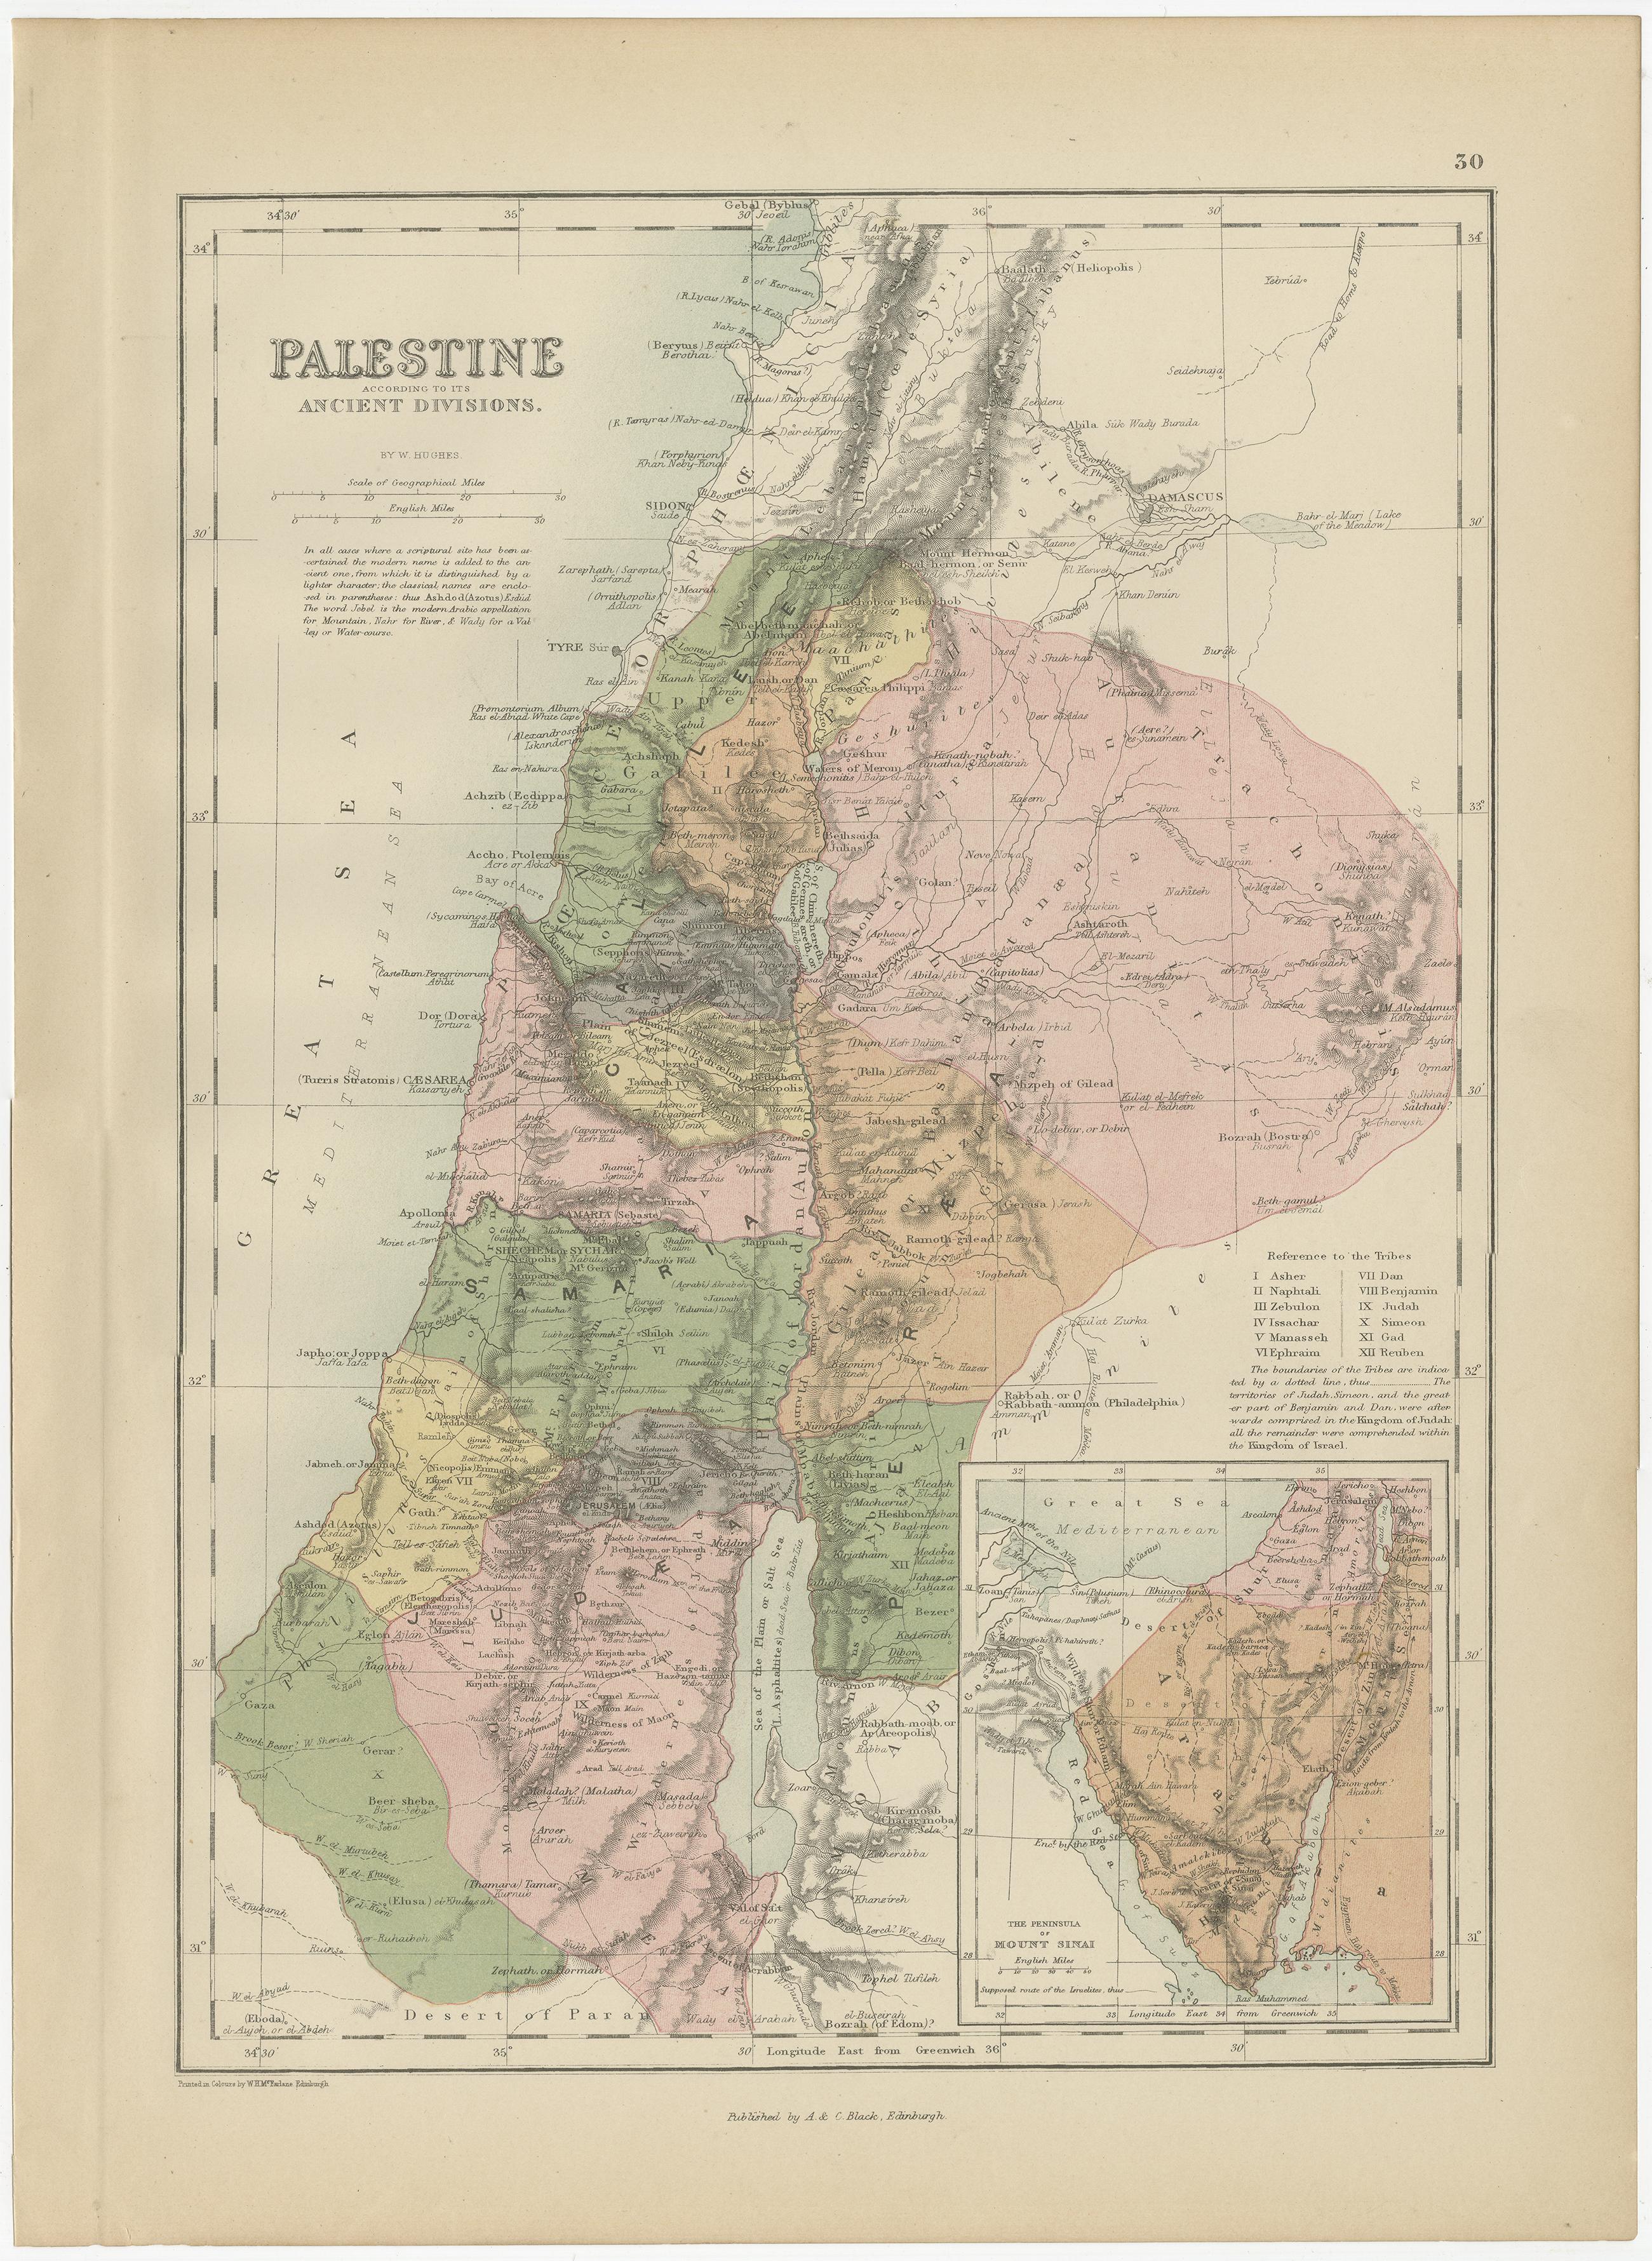 ancient palestine map